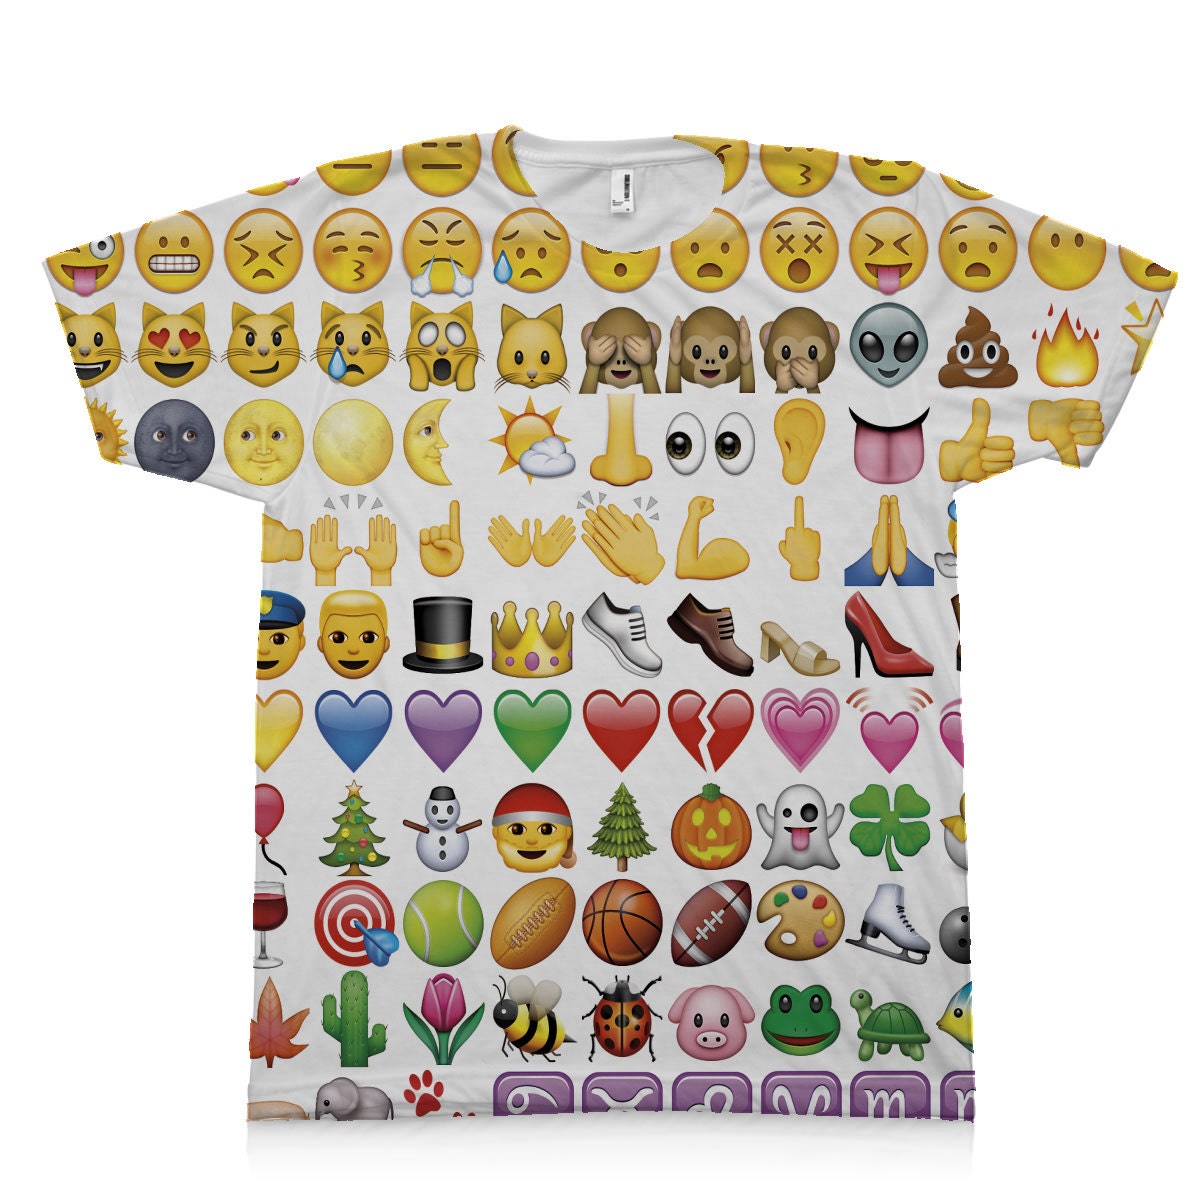 Emoji T Shirt_ All Over Shirt Printing | Etsy